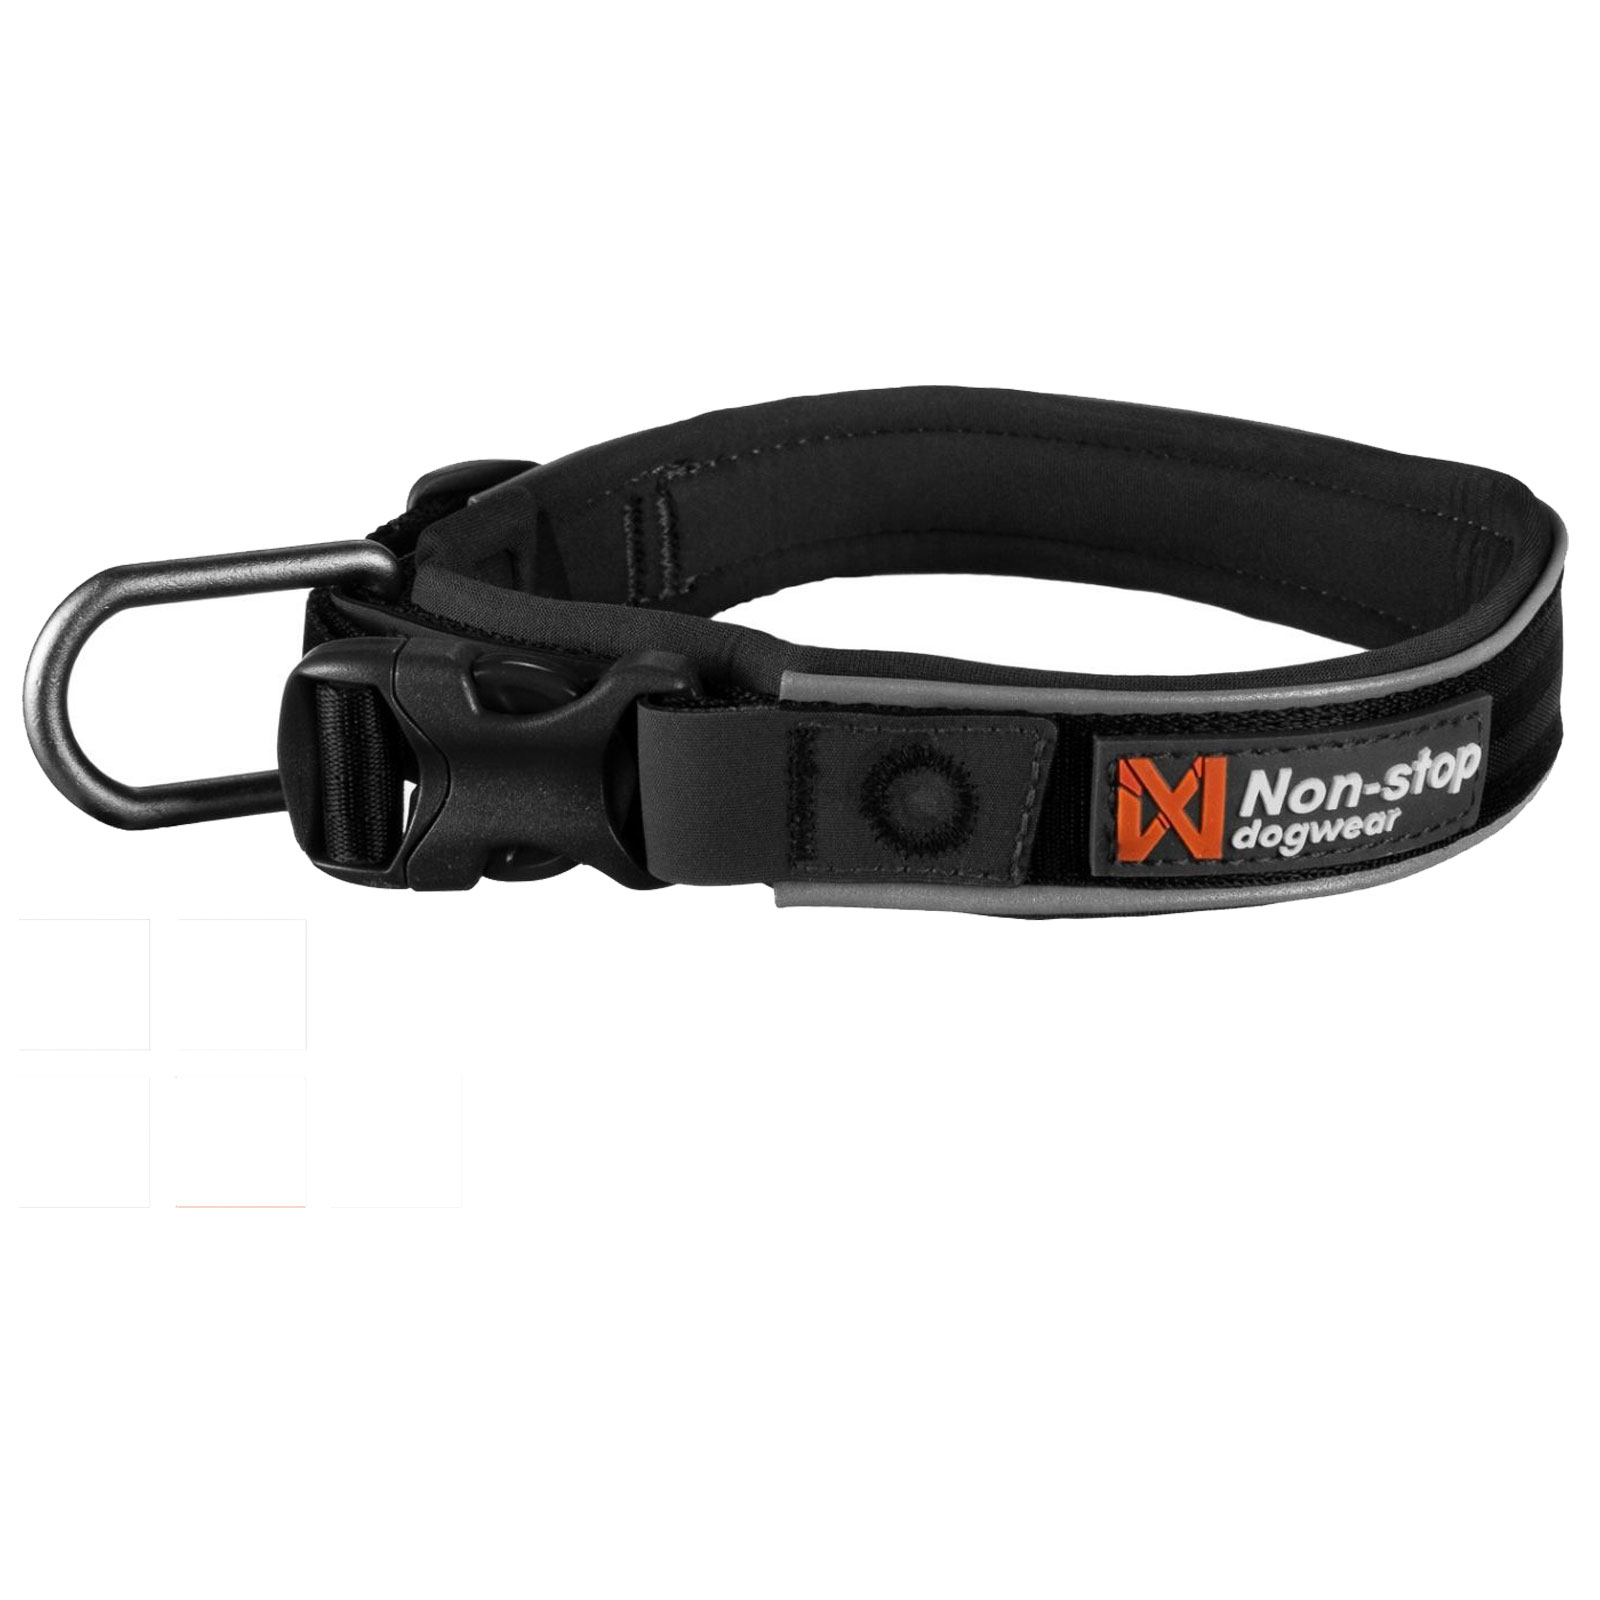 Non-stop dogwear ROAM Collar black | 345 | Halsband von Non-stop dogwear